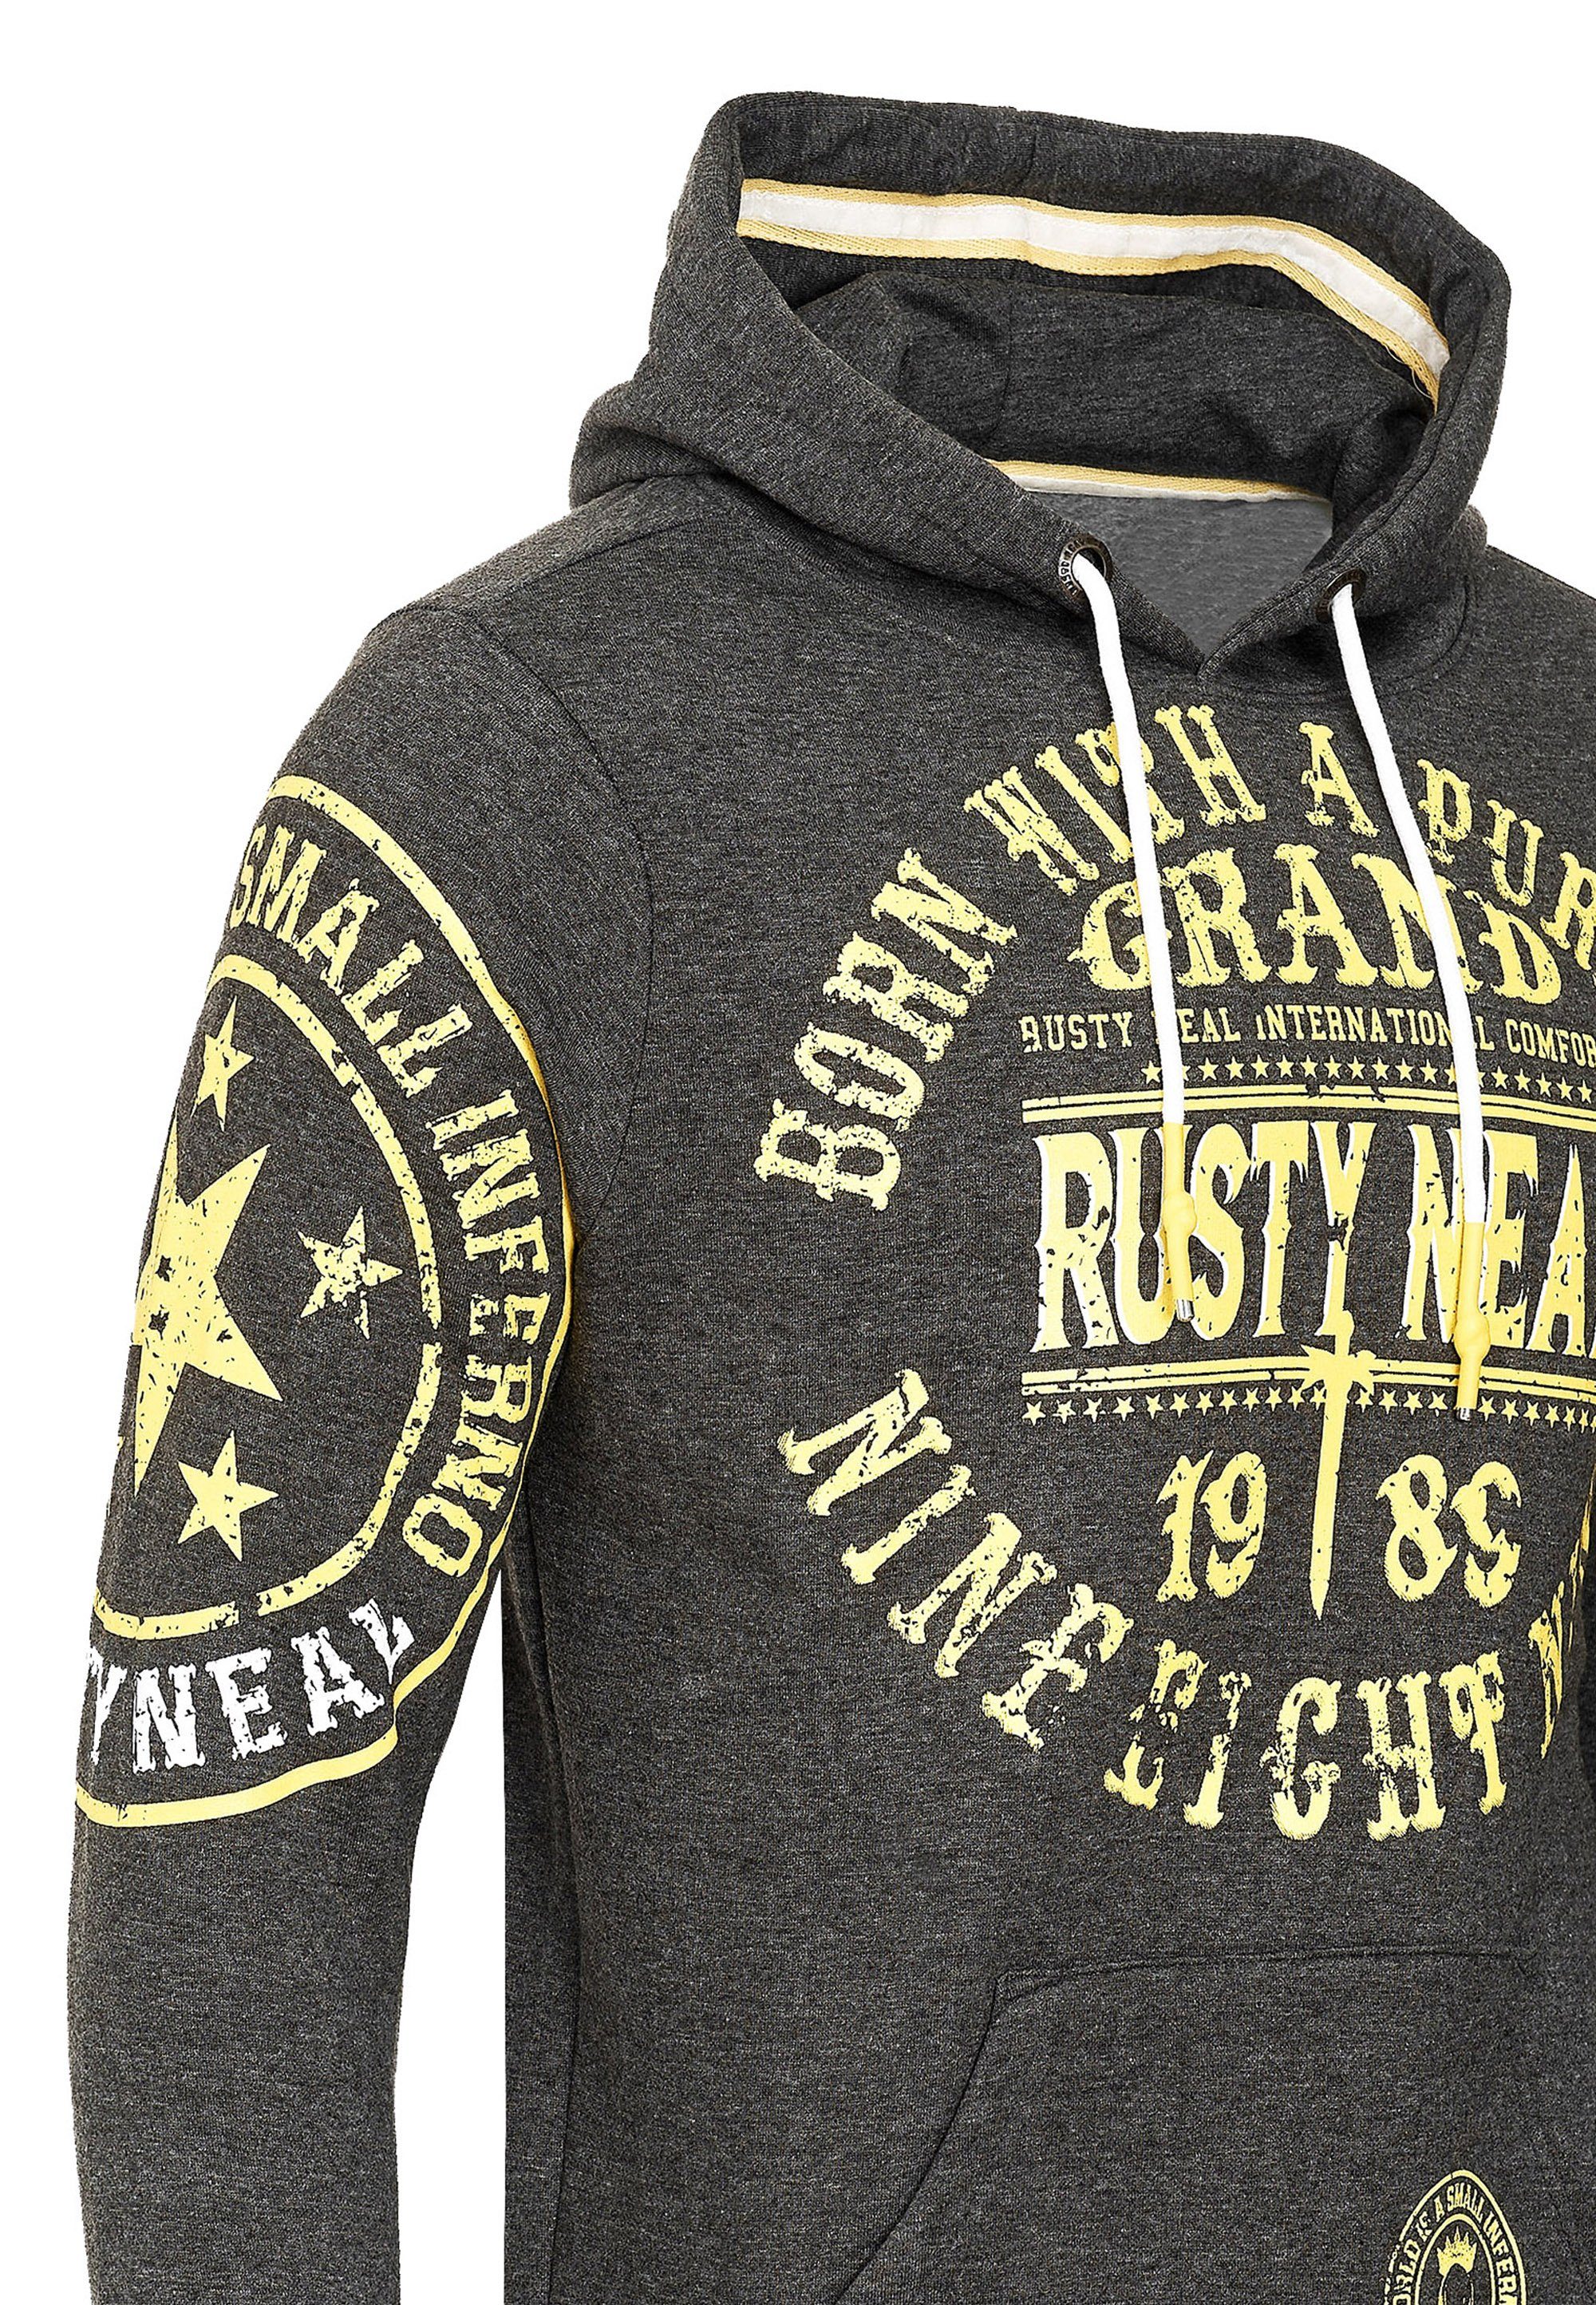 Rusty Neal Kapuzensweatshirt mit Markenprints anthrazit-gelb coolen